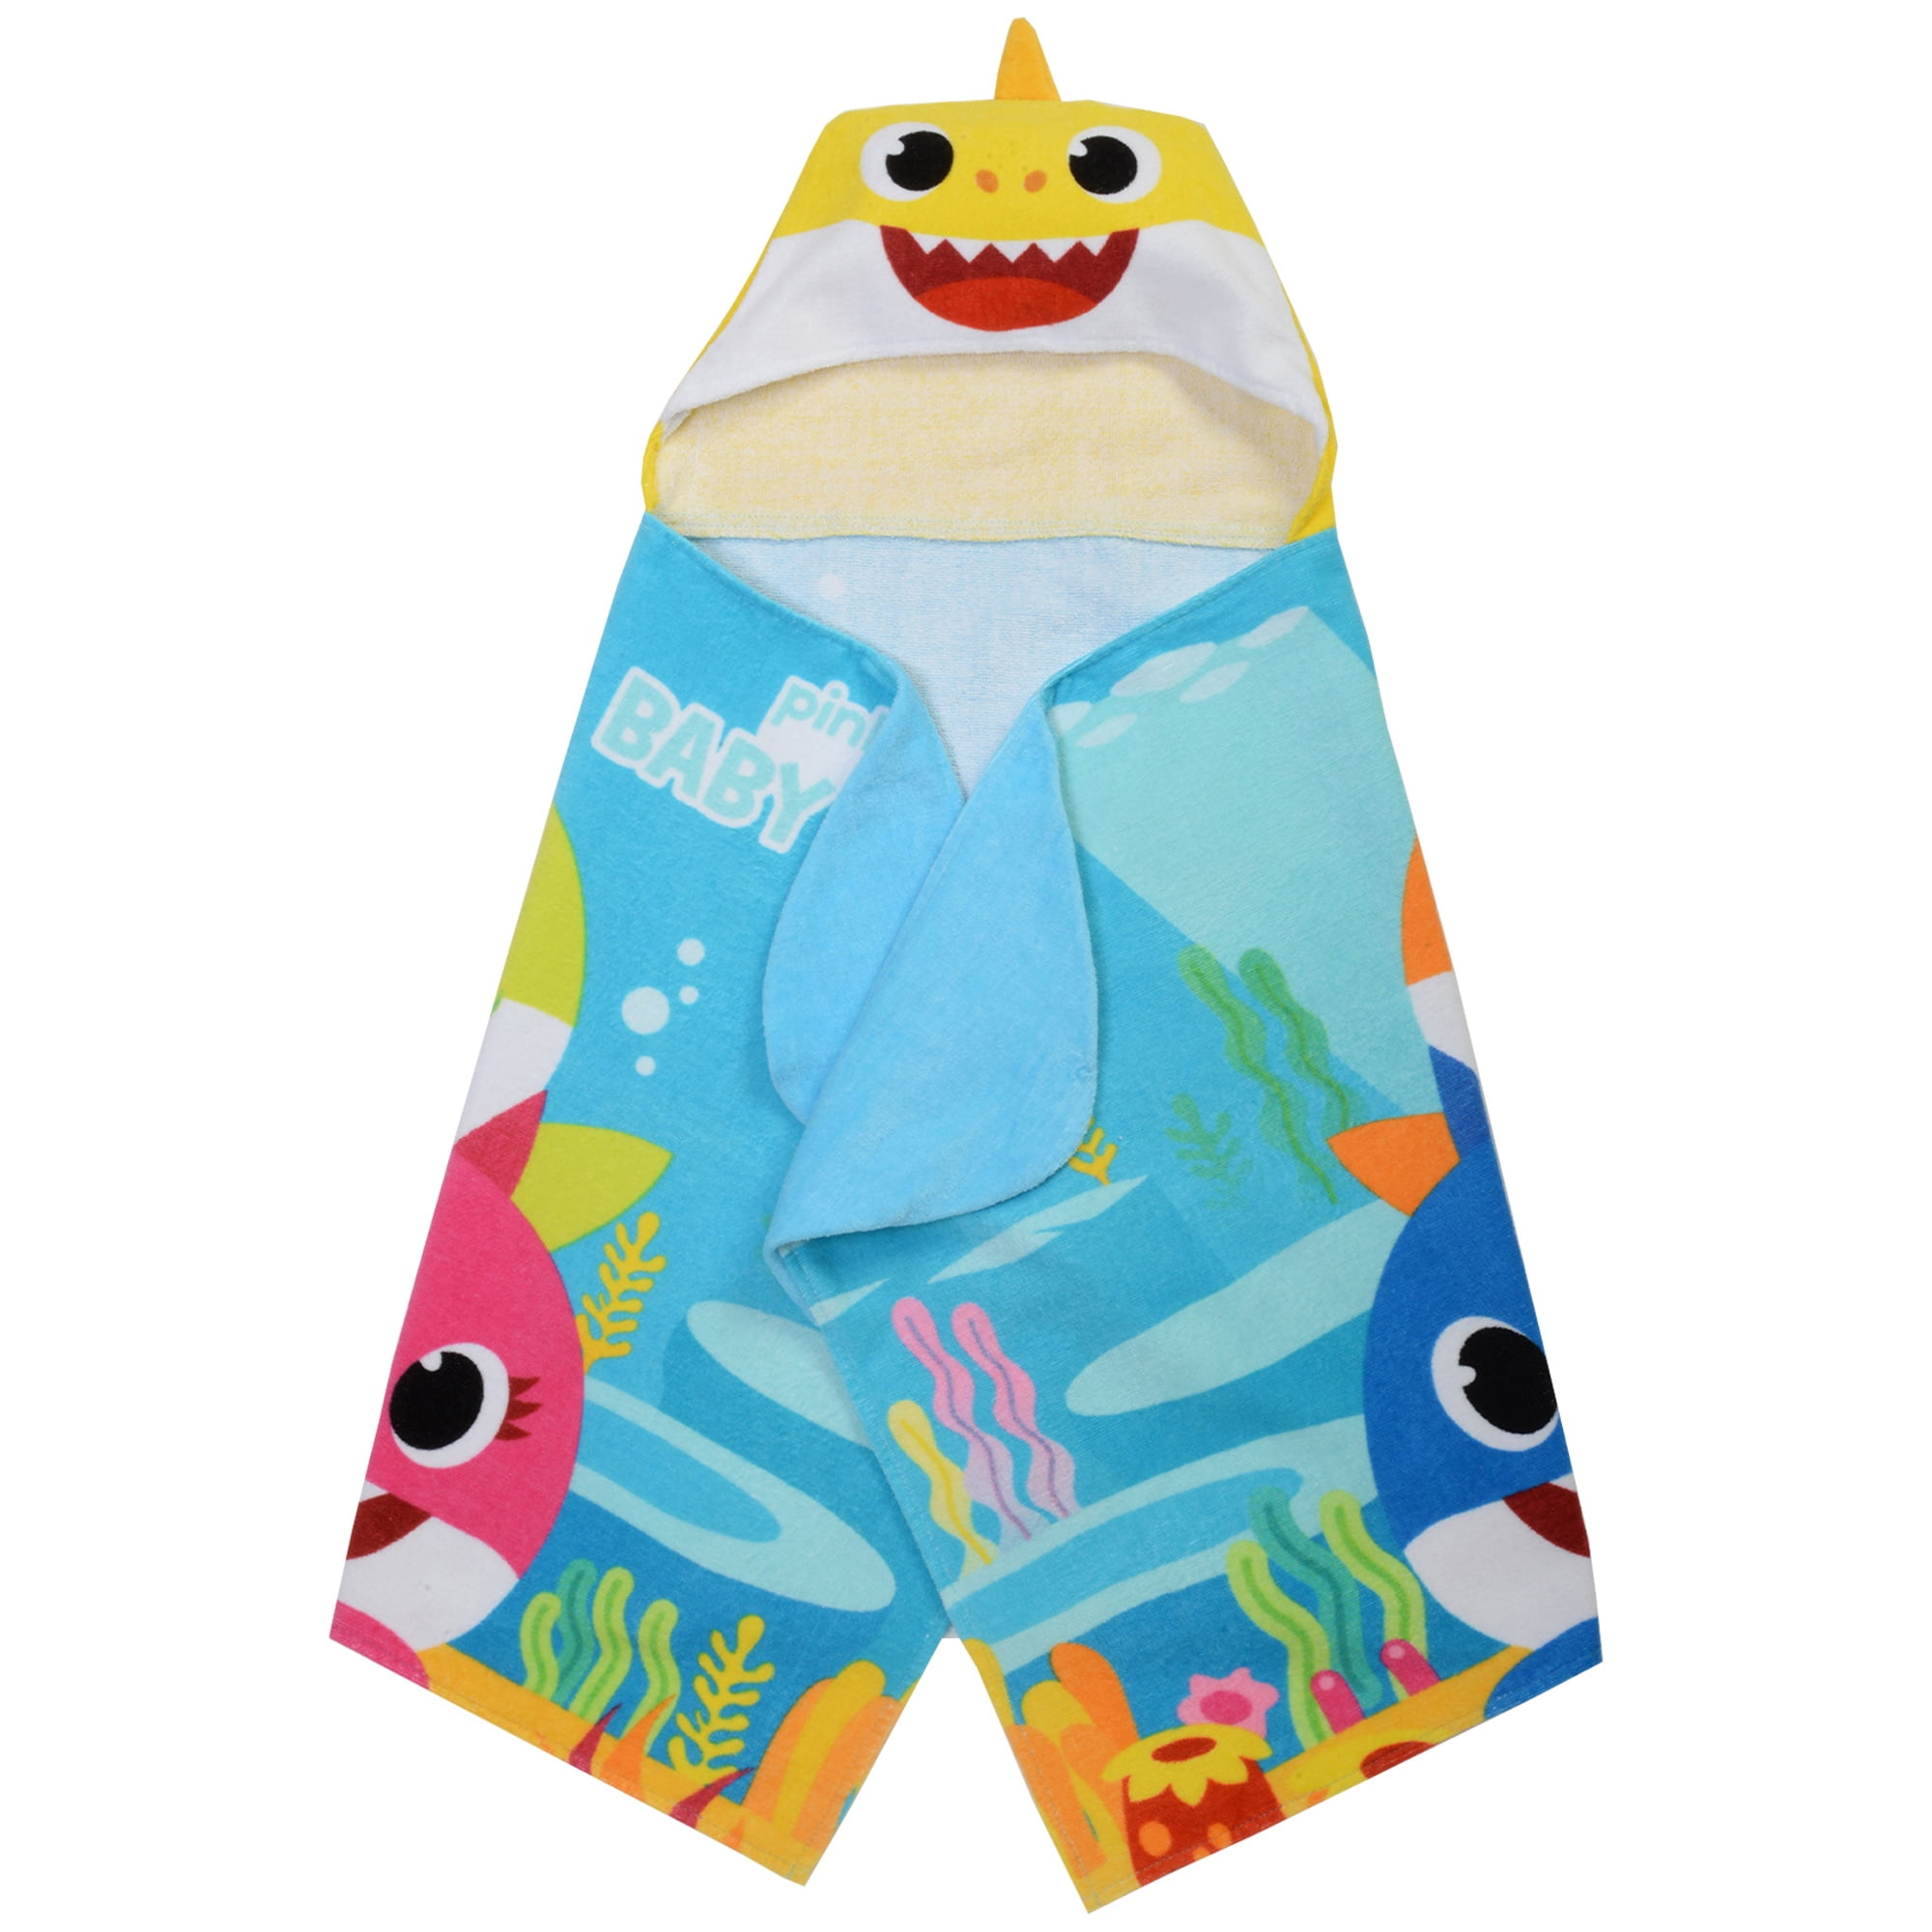 Baby Shark Kids Hooded Towel, Cotton, Blue, Pinkfong